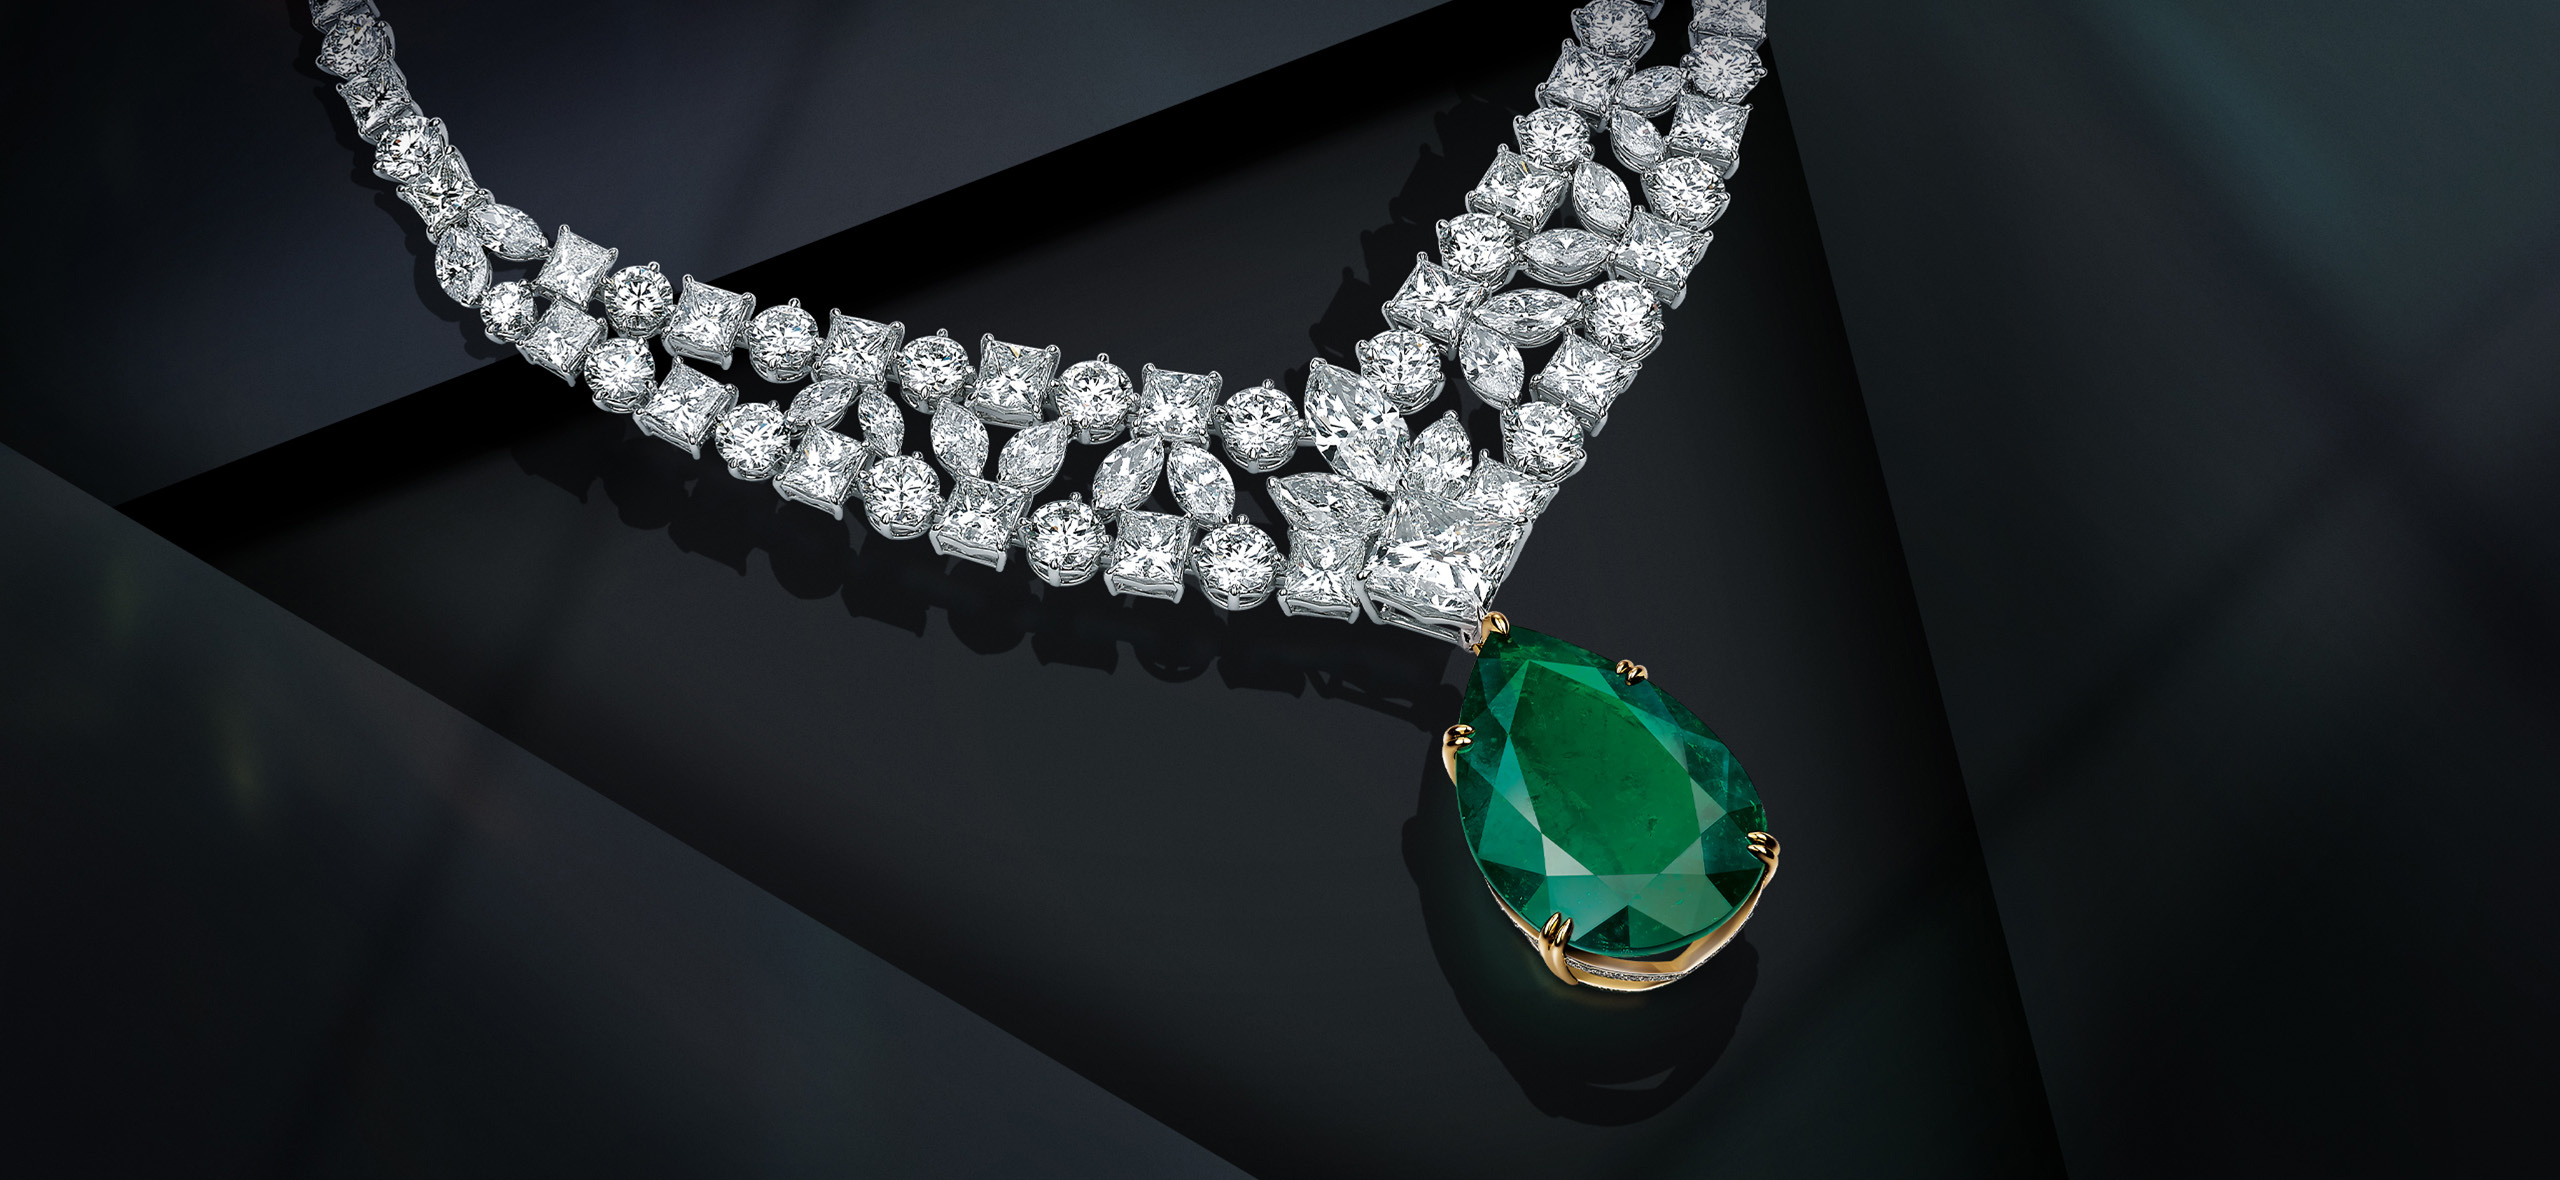 Emerald and diamond jewelry, Luxury gemstones, Exquisite craftsmanship, High-end accessories, 2560x1180 Dual Screen Desktop